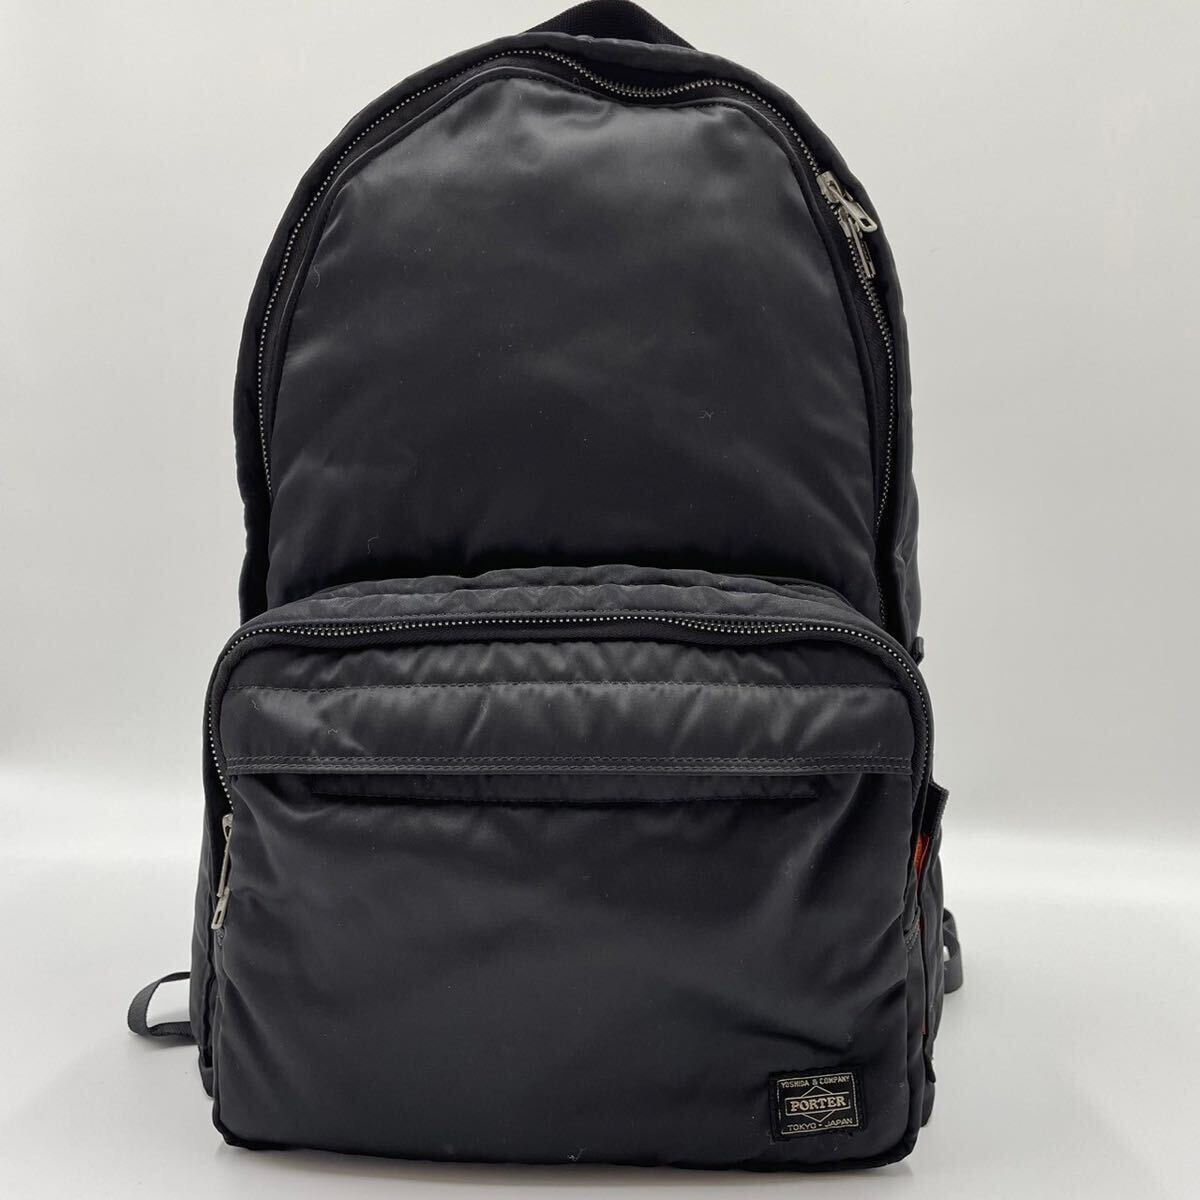 [1 jpy start ]PORTER Poe tartan car rucksack backpack Day Pack black Yoshida bag black 19L high capacity 